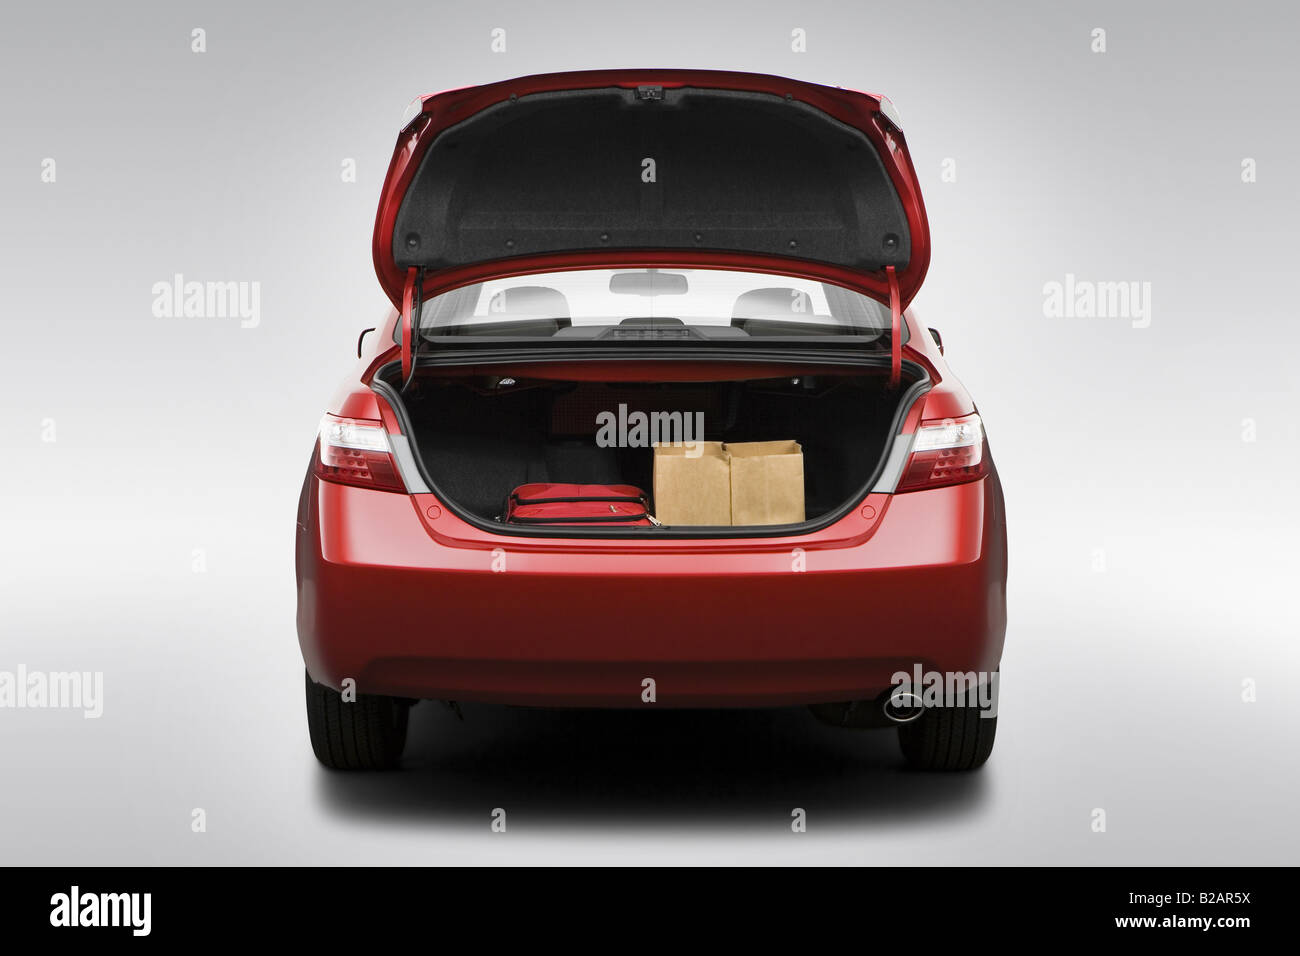 2009 Toyota Camry Hybrid rot - Stamm Requisiten Stockfoto